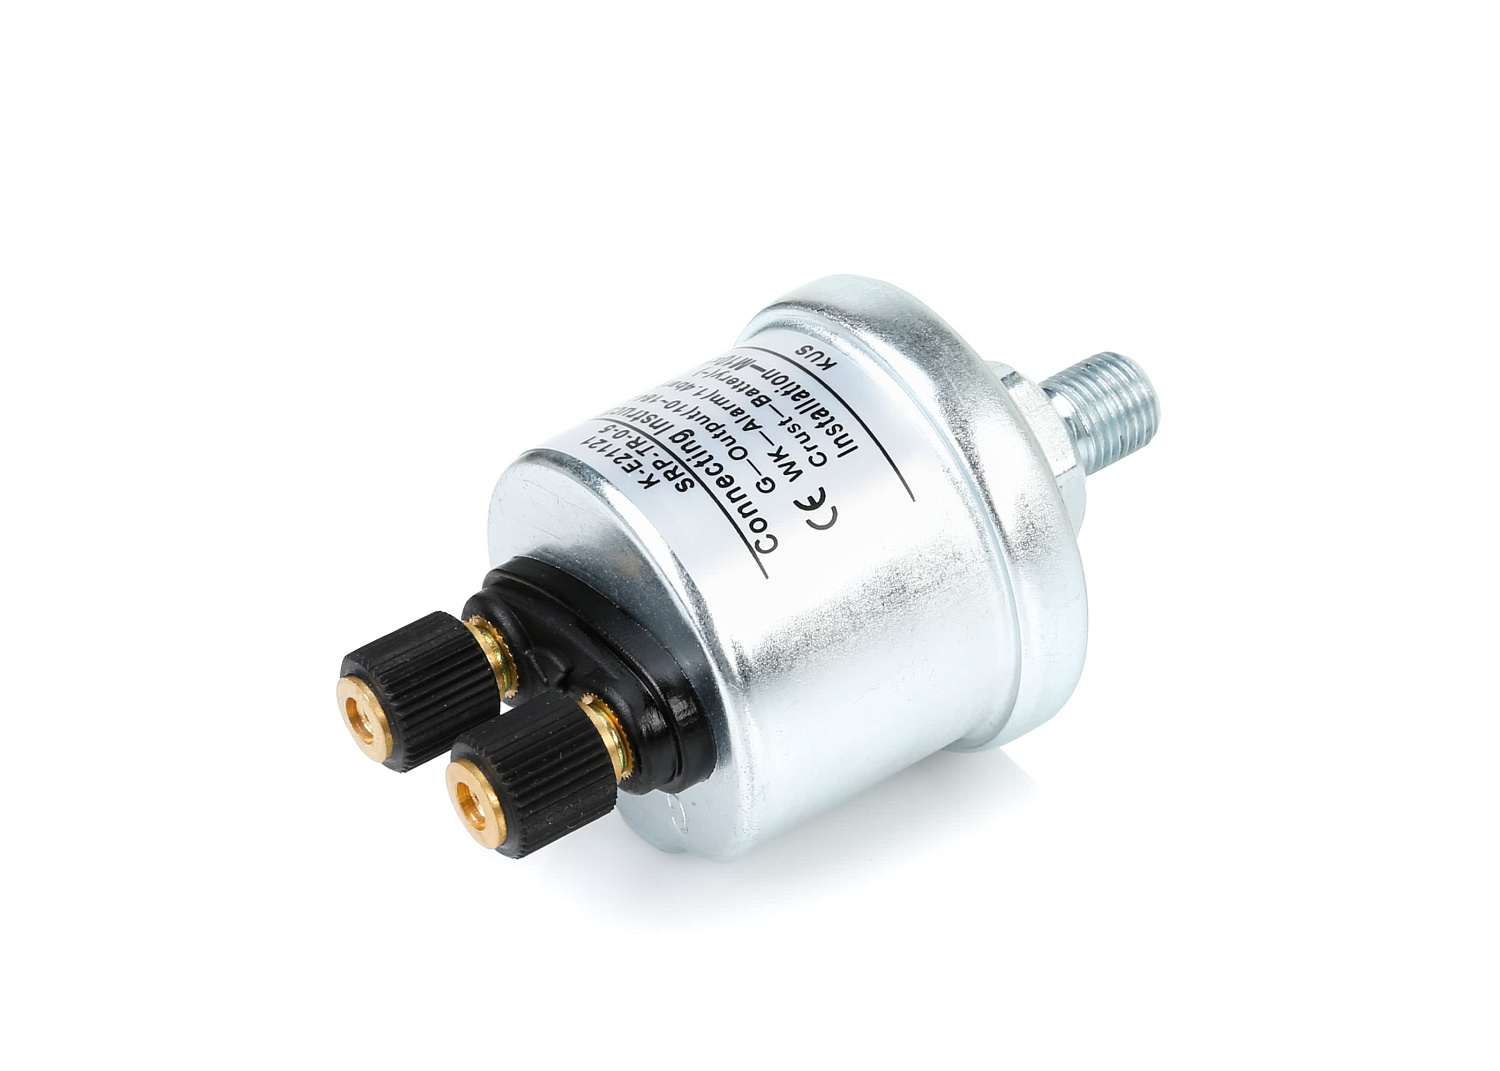 KUS Oil Pressure Sensor 0-5 bar / 10-184 ohm; with alarm